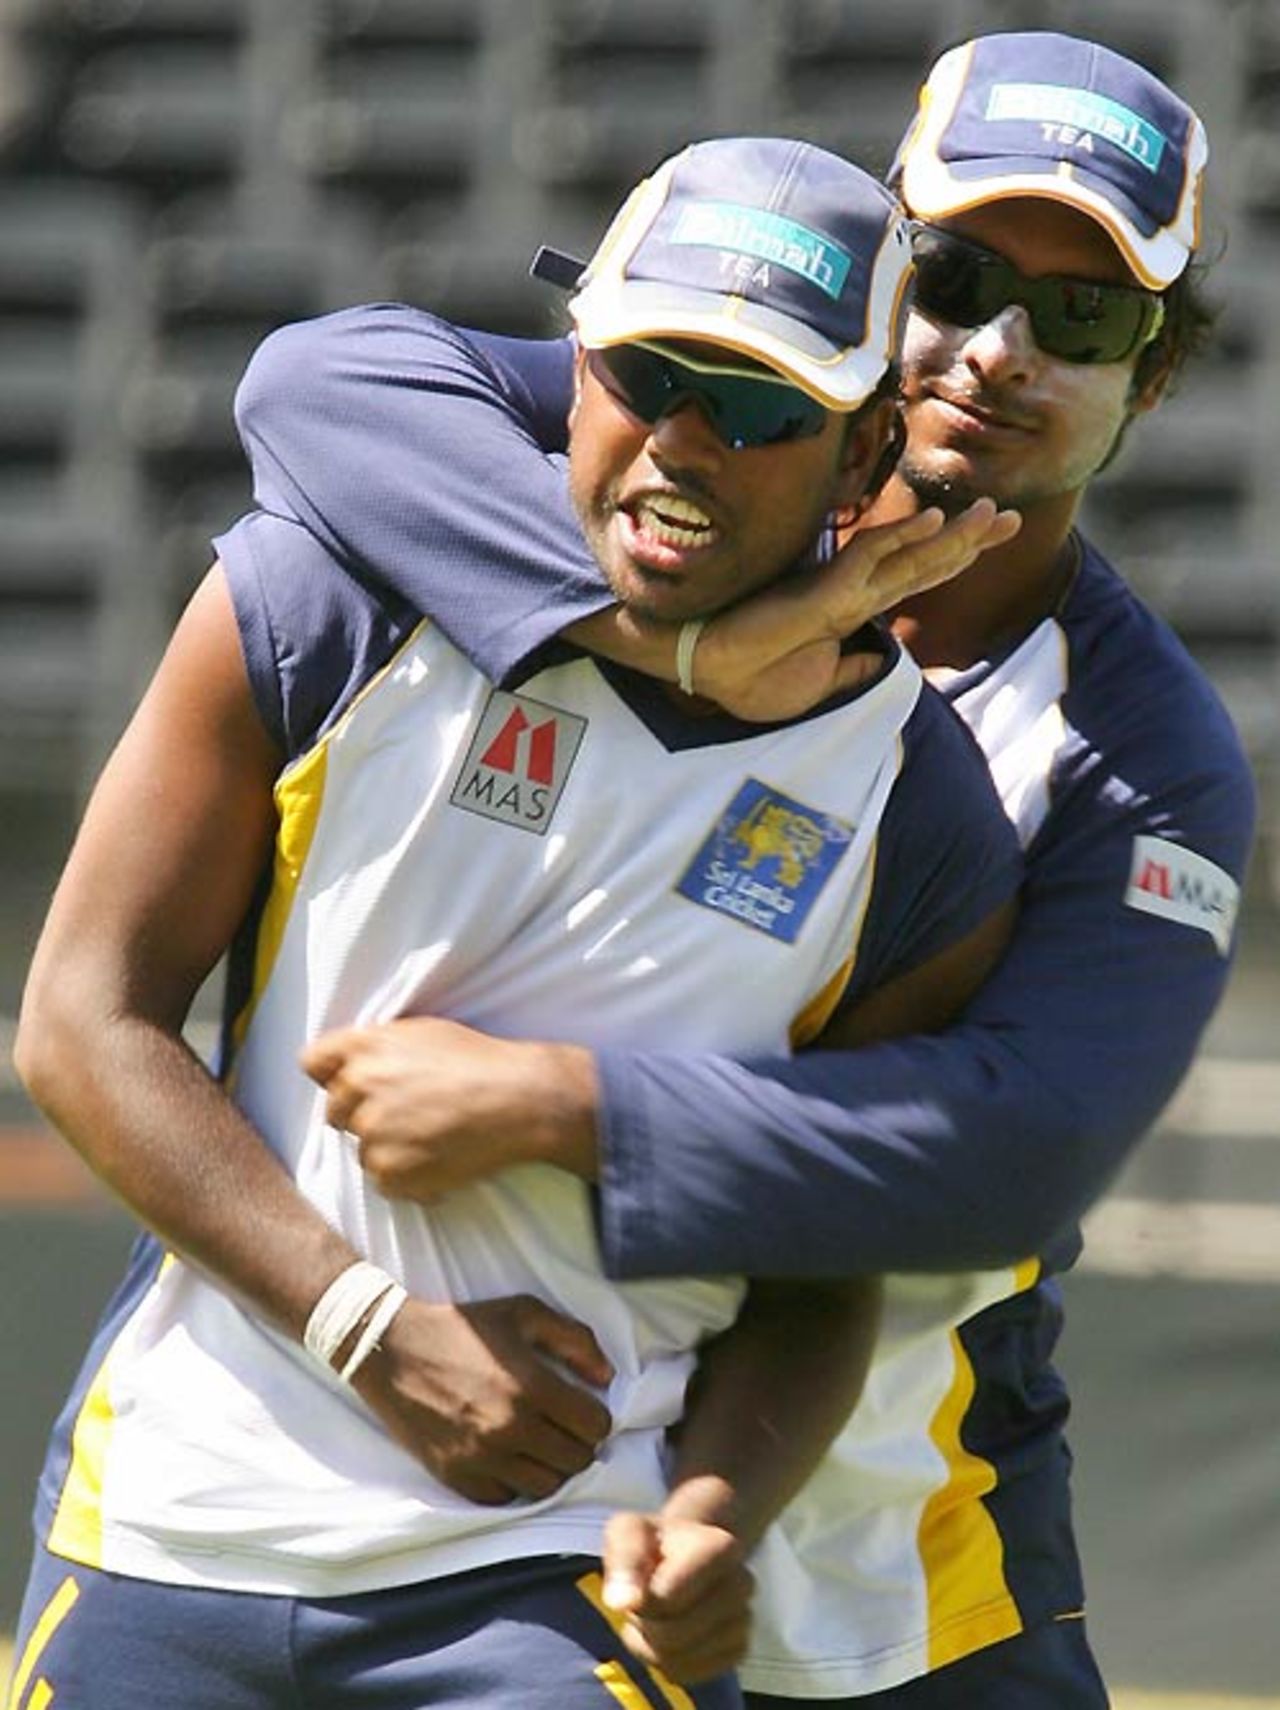 Malinga Bandara and Kumar Sangakkara share a light moment during a practice session, 2007 World Cup, Grenada, April 11, 2007